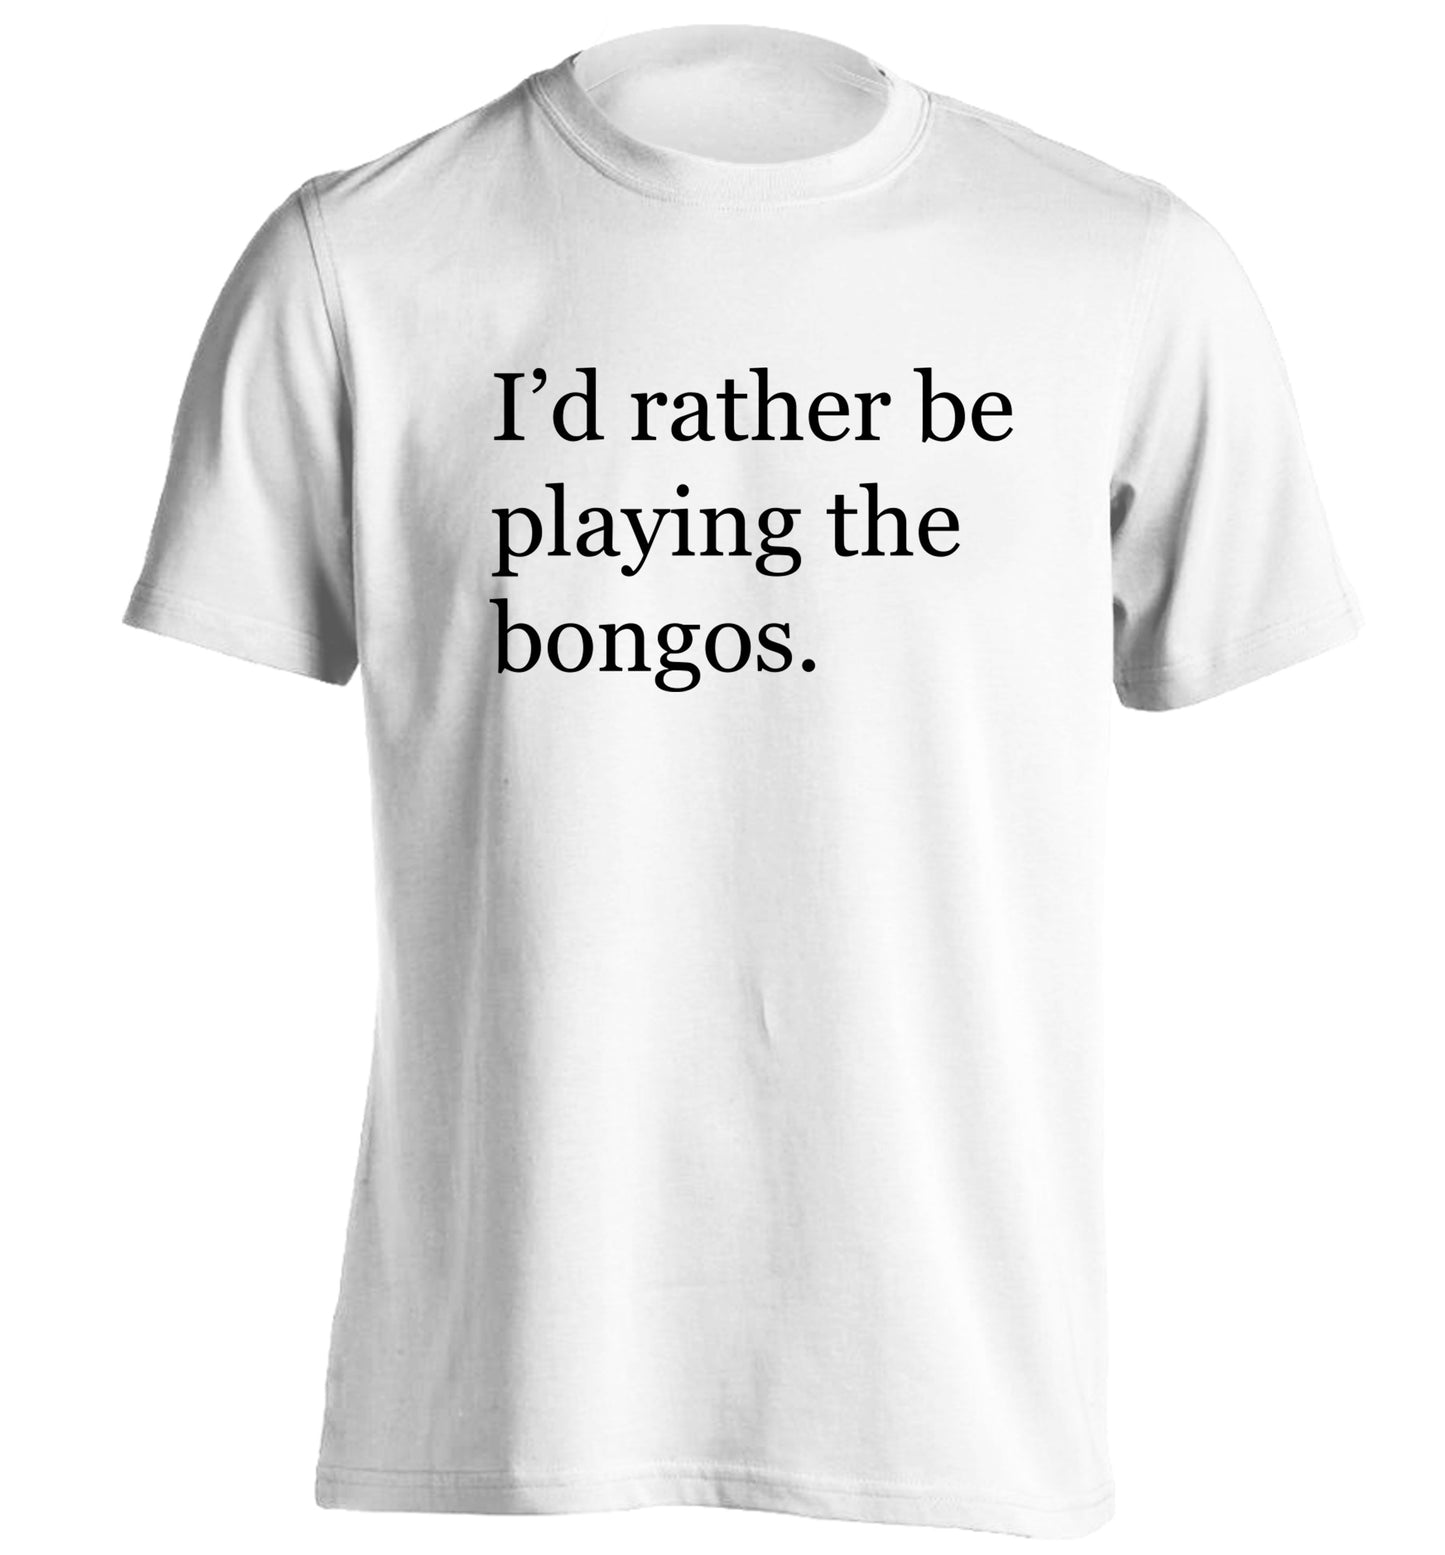 I'd rather be playing the bongos adults unisexwhite Tshirt 2XL